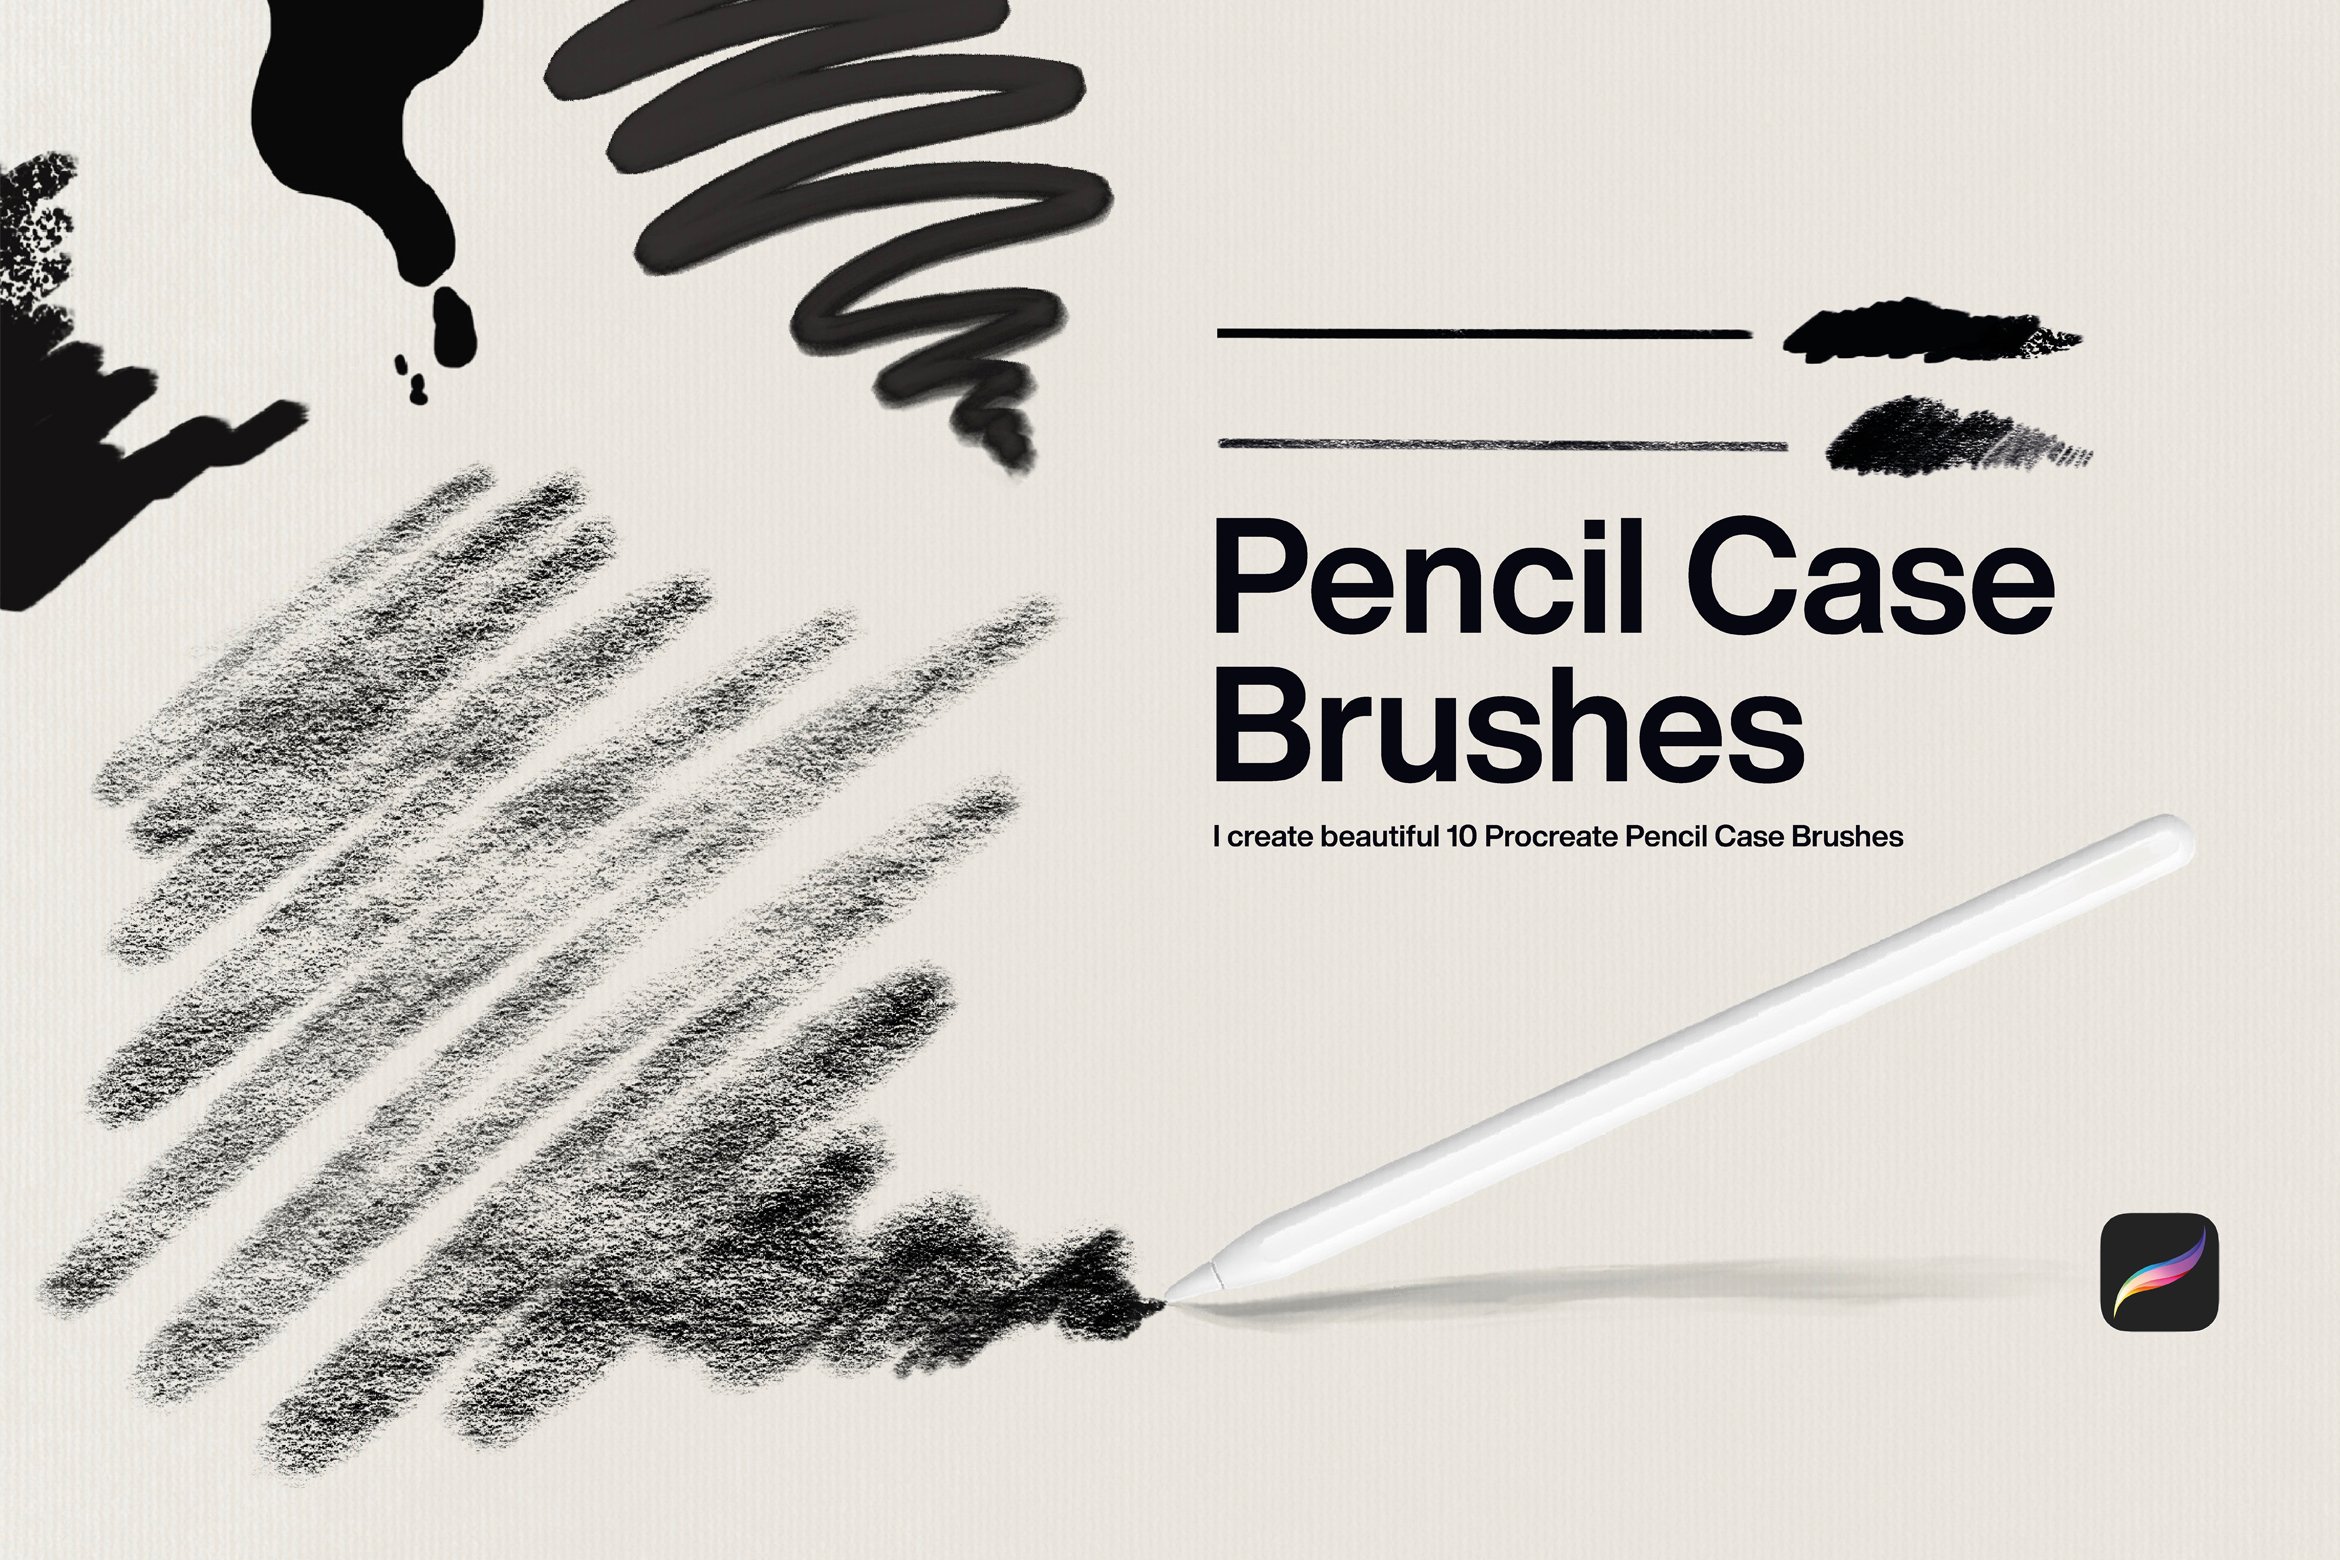 10 Pencil Case Brushes Procreate cover image.